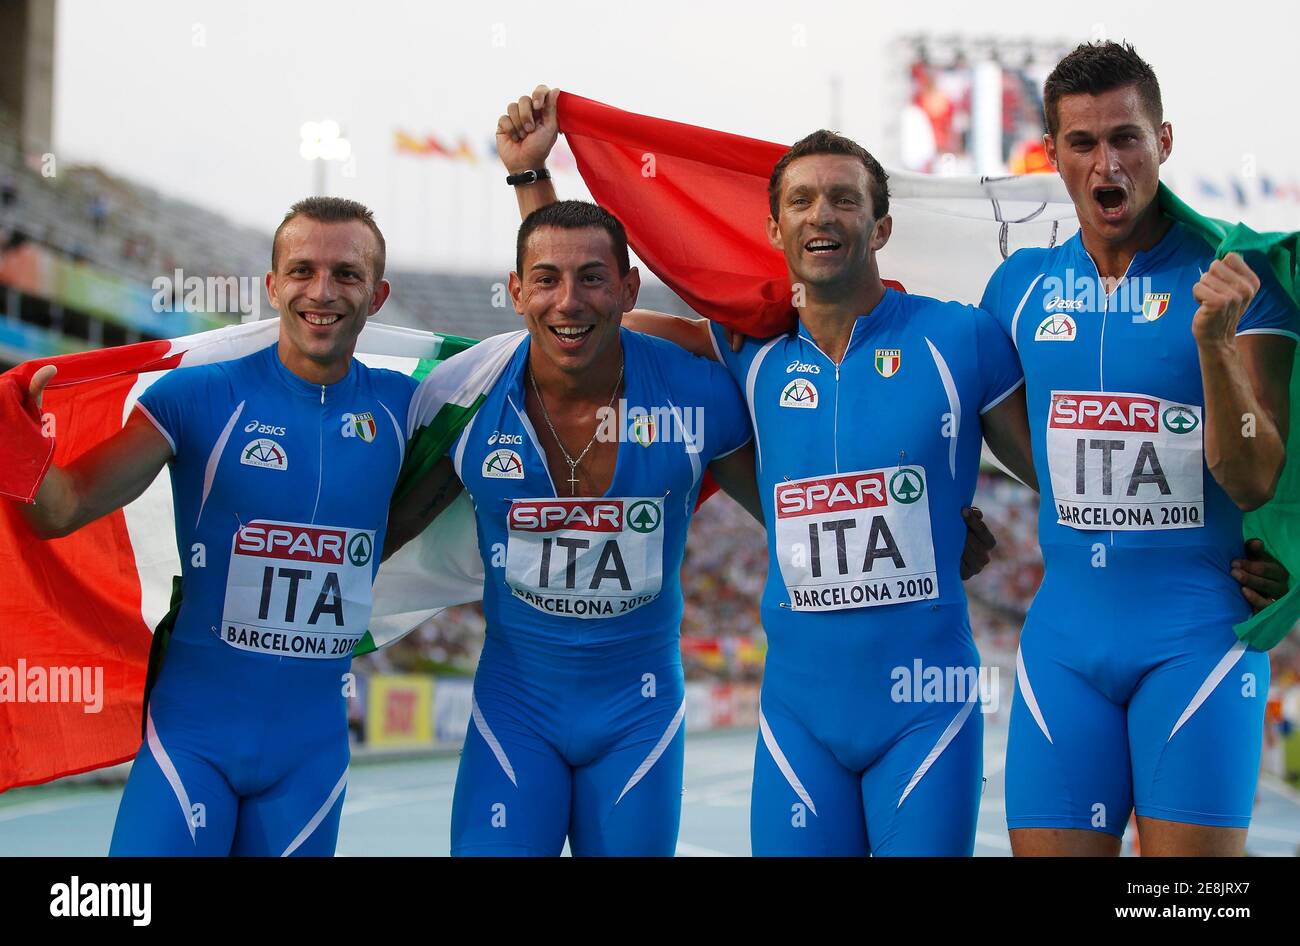 Emanuele Di Gregorio, Simone Collio, Maurizio Checcucci and Roberto Donati  (L-R) of Italy celebrate after winning the silver medals in the men's 4 x  100 metres relay final at the European Athletics